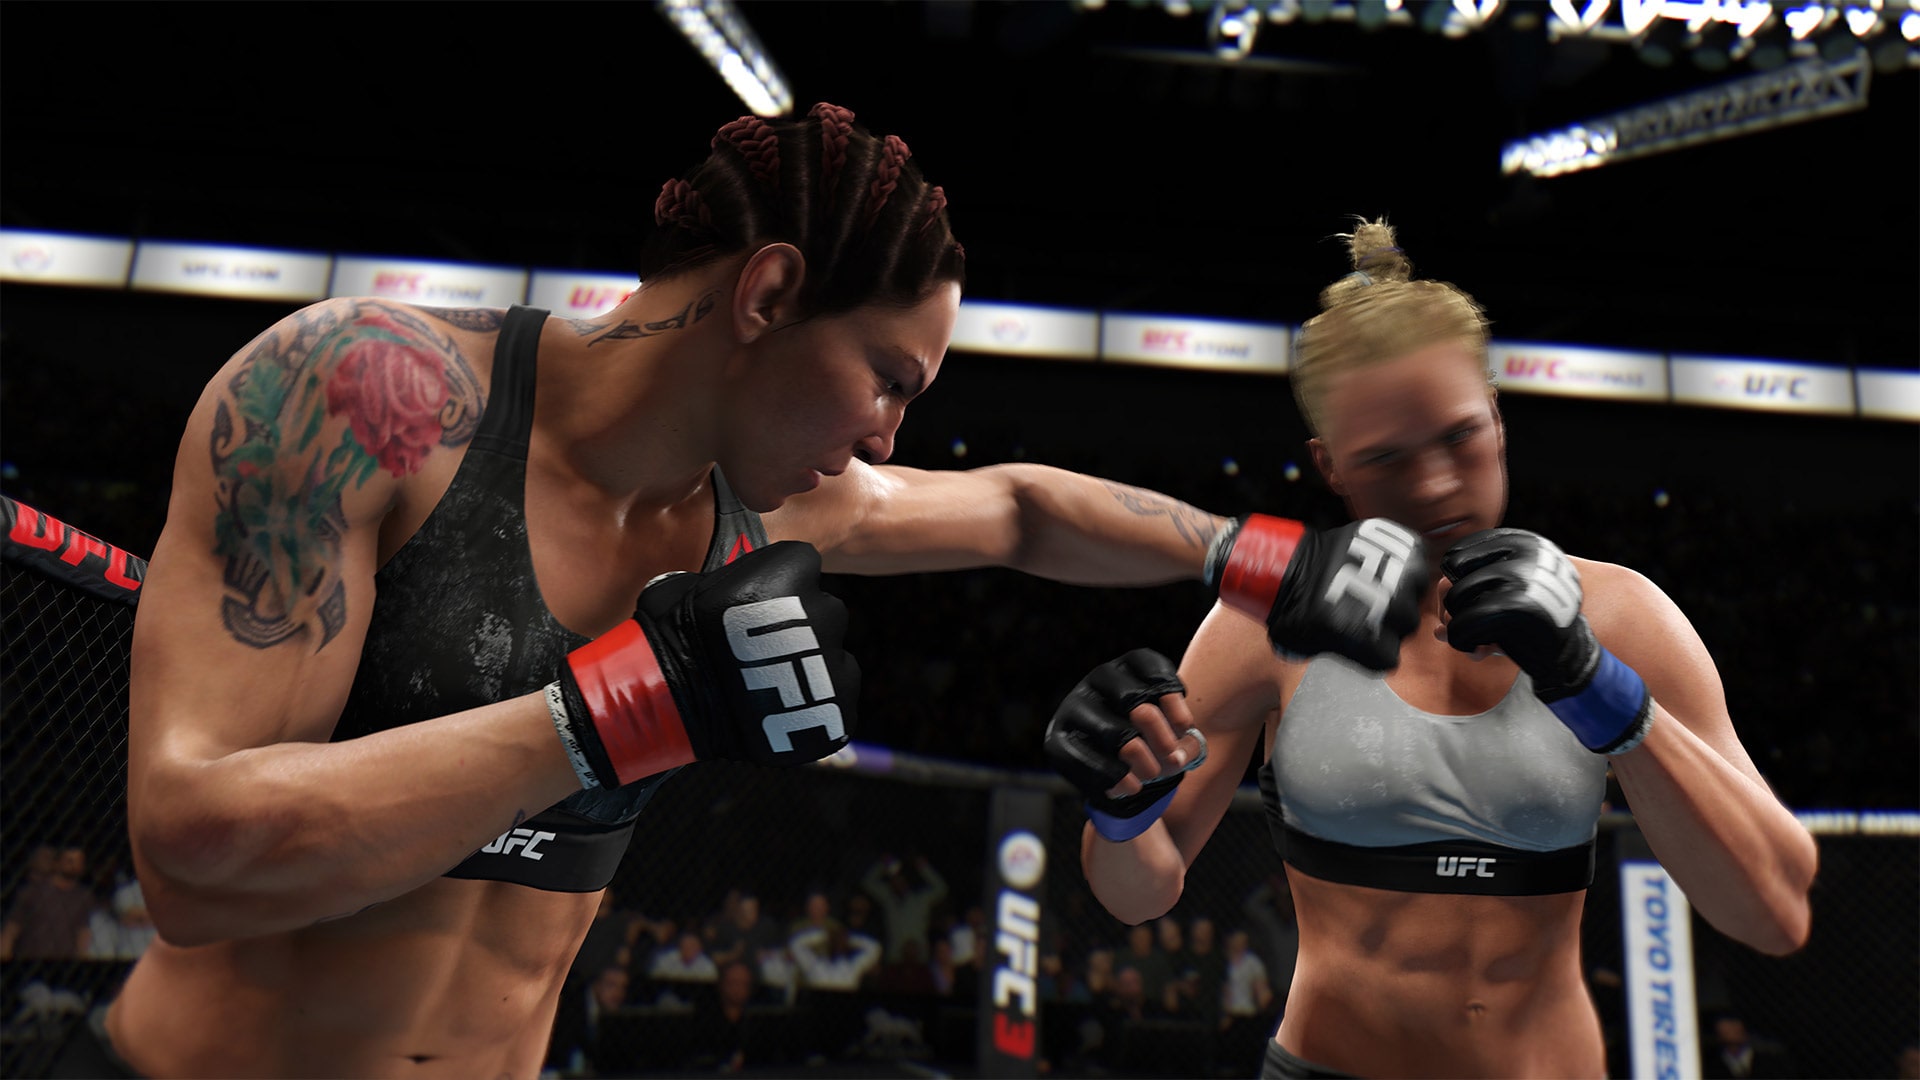 PS4 EA SPORTS™ UFC® 3  Sony Store Peru - Sony Store Peru